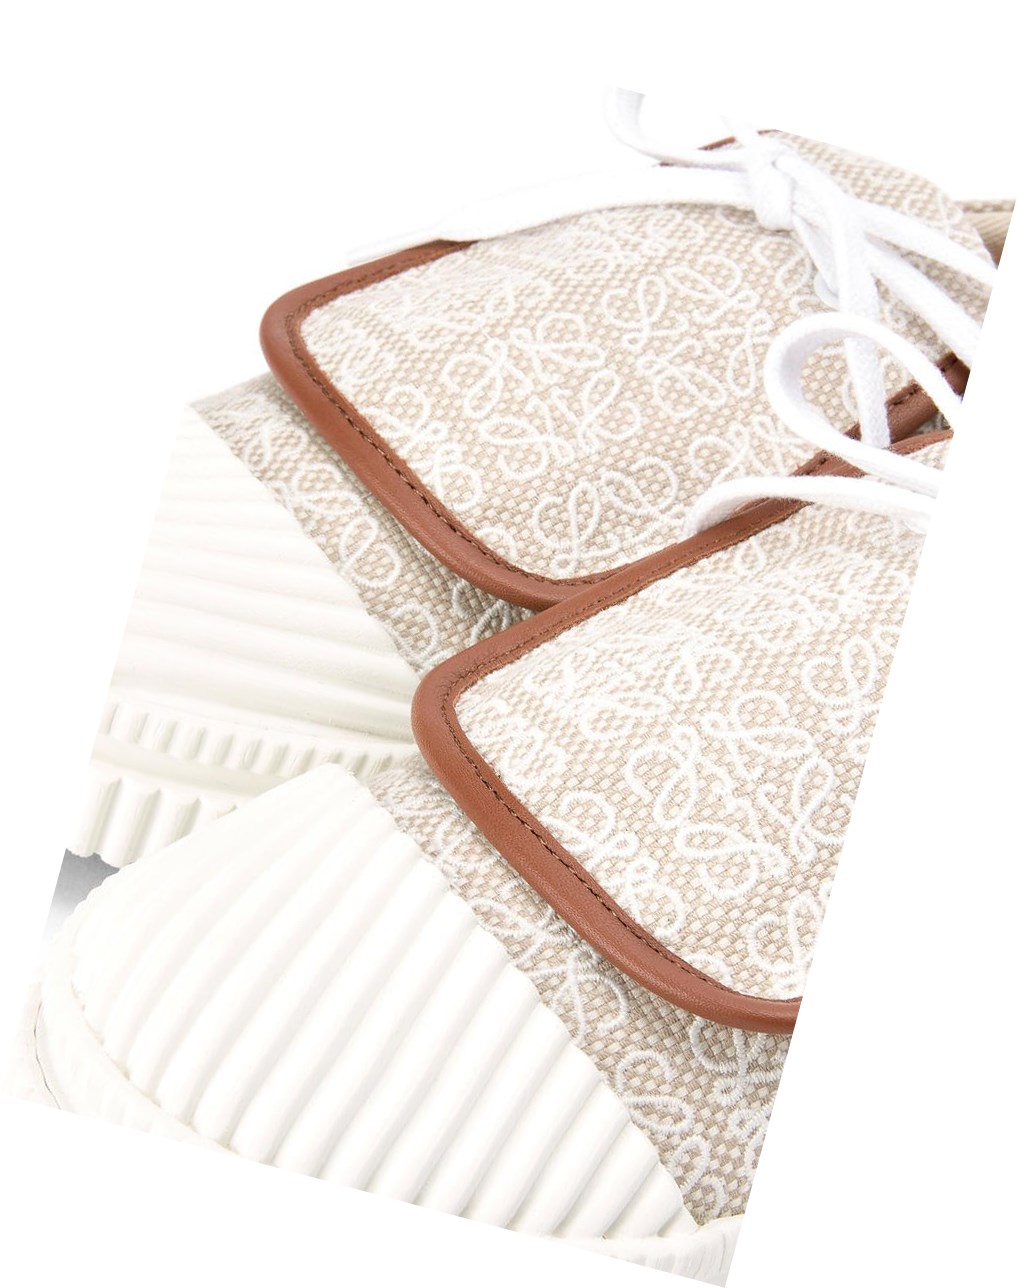 Loewe Anagram flap sneaker in canvas Natural / White | CA9265348